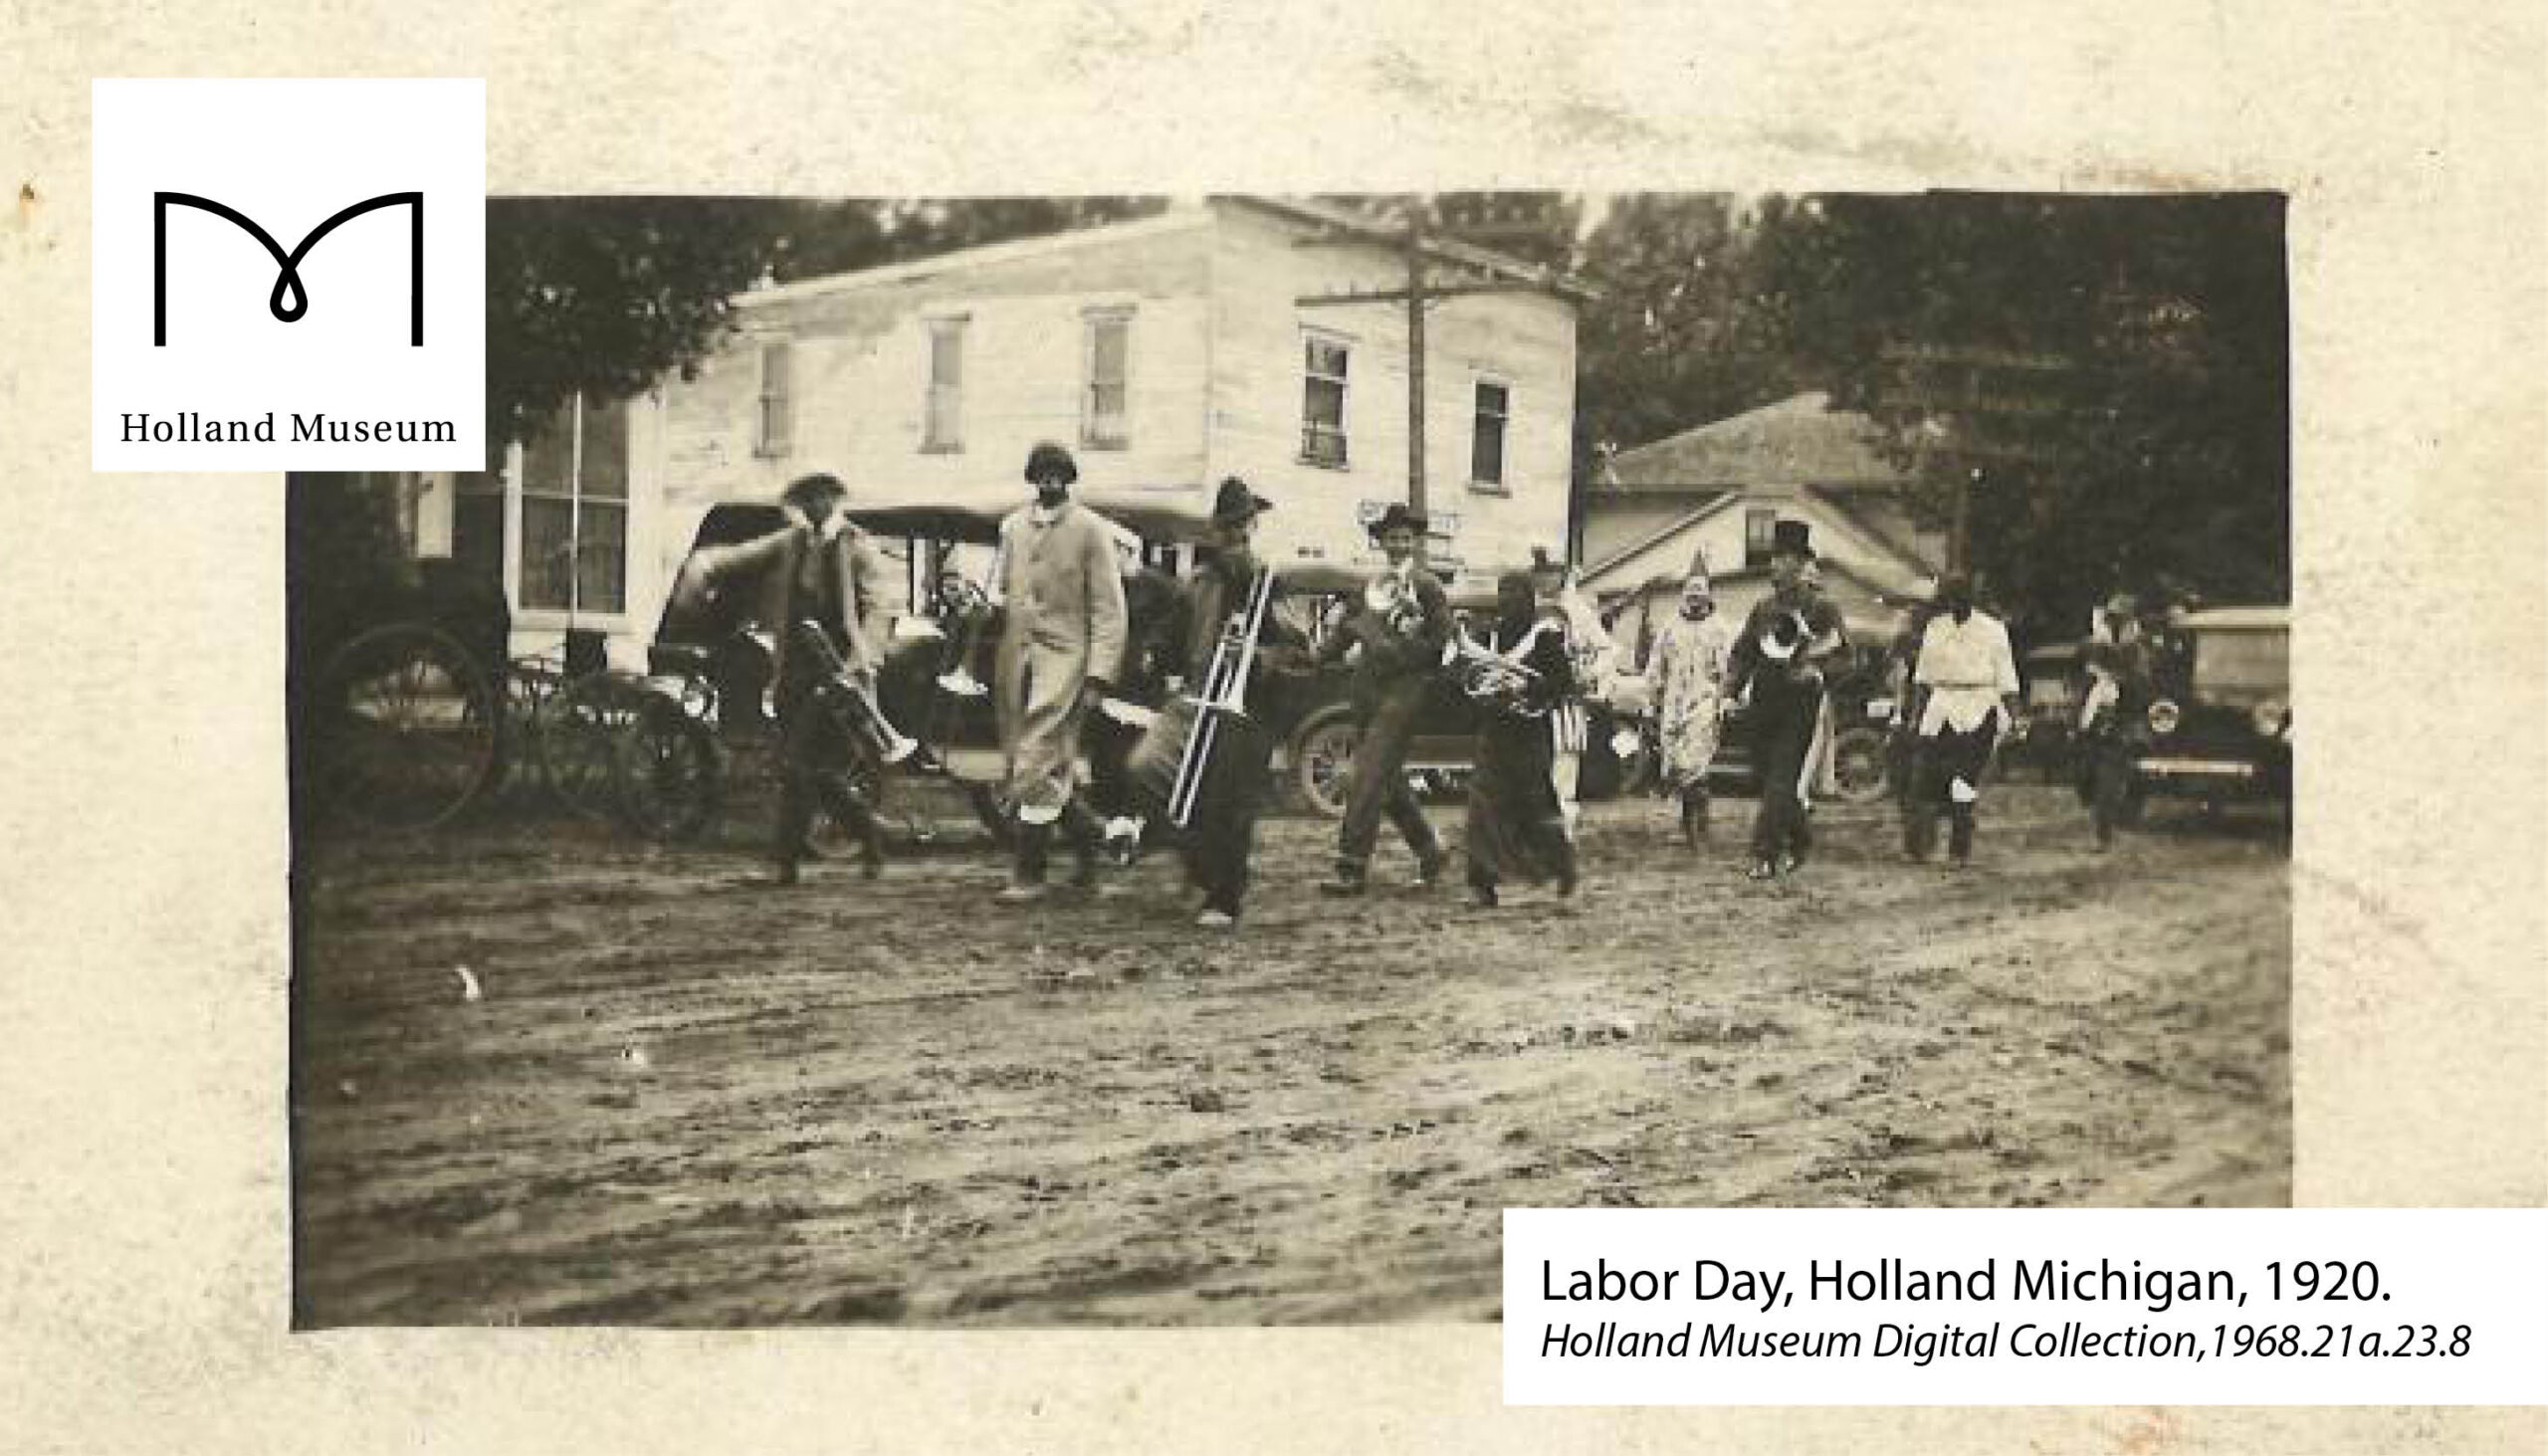 Labor Day 1920, Holland Michigan